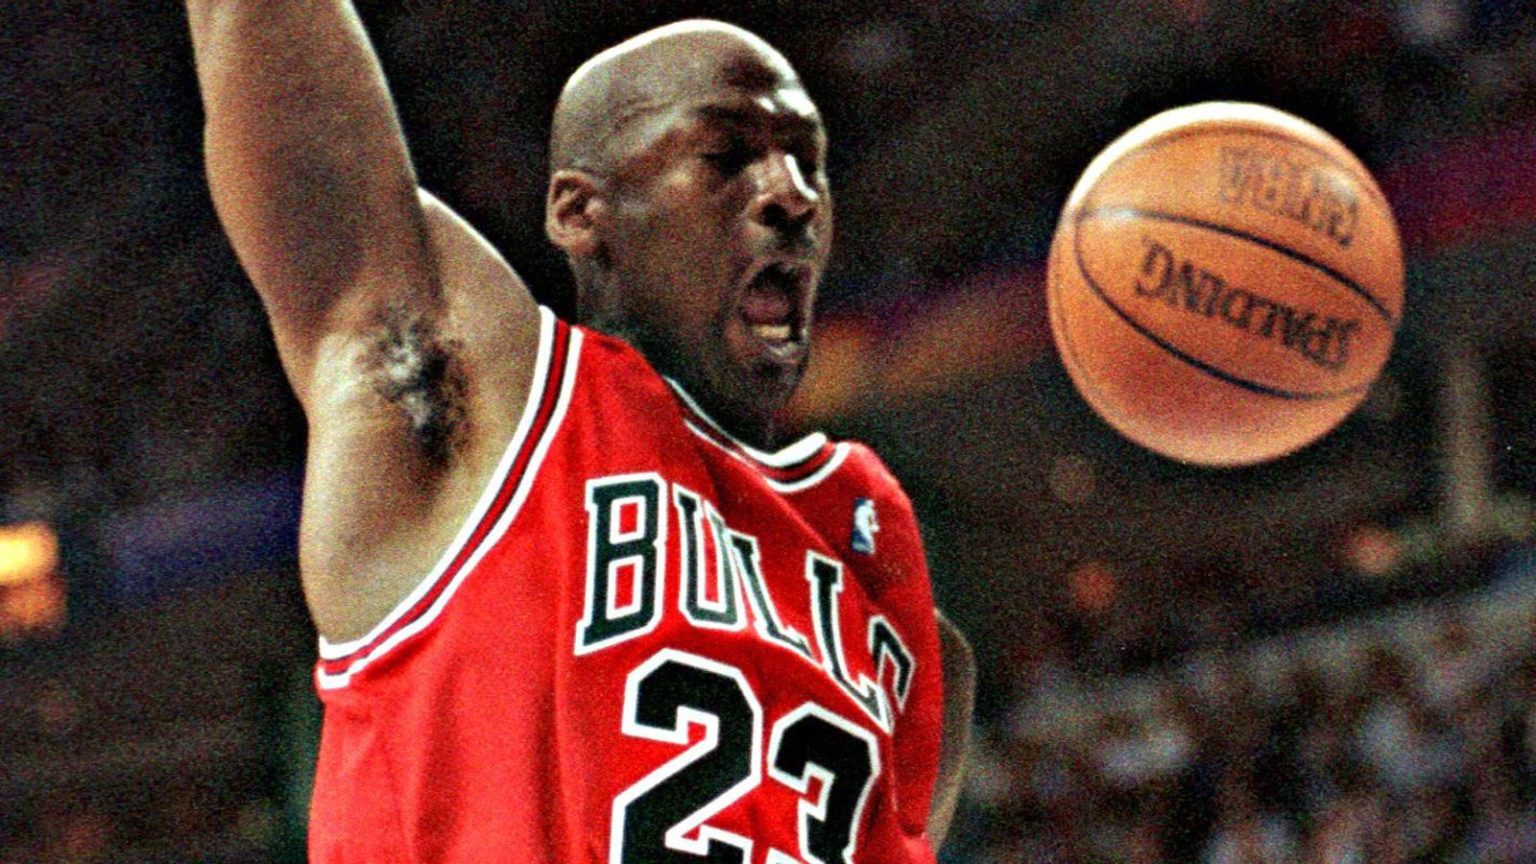 Michael Jordan today in sports history